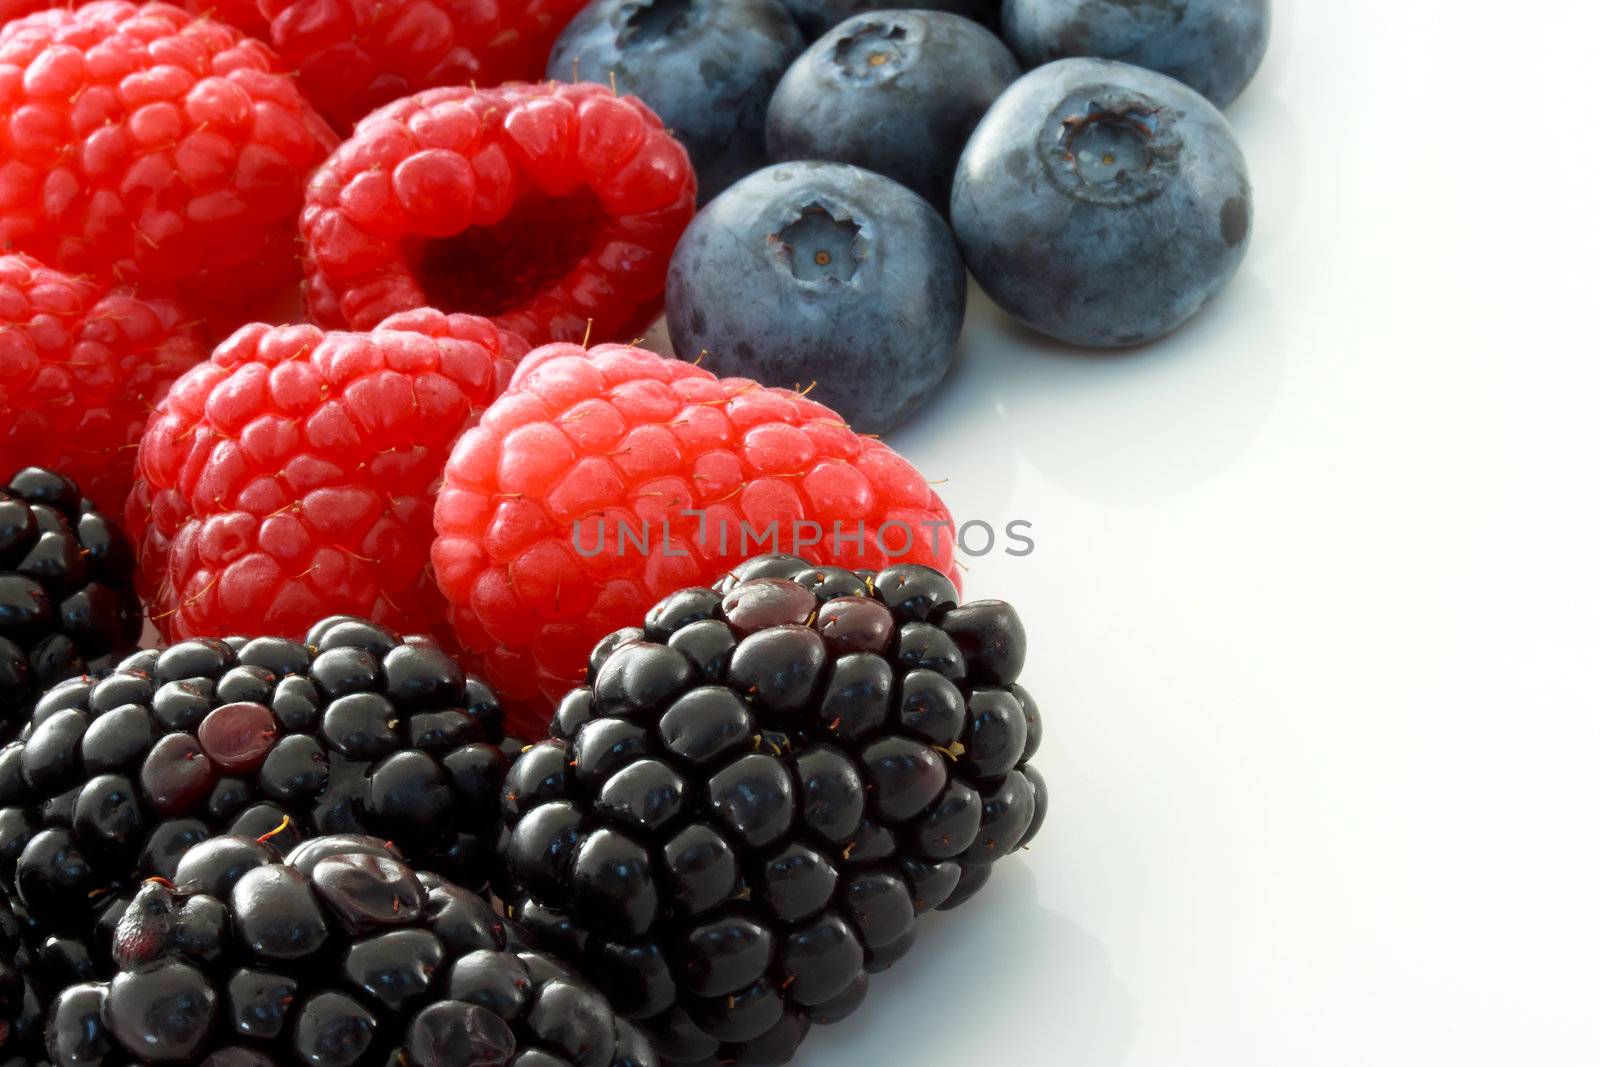 Raspberries, Blueberries and Blackberries on White Ceramic plate